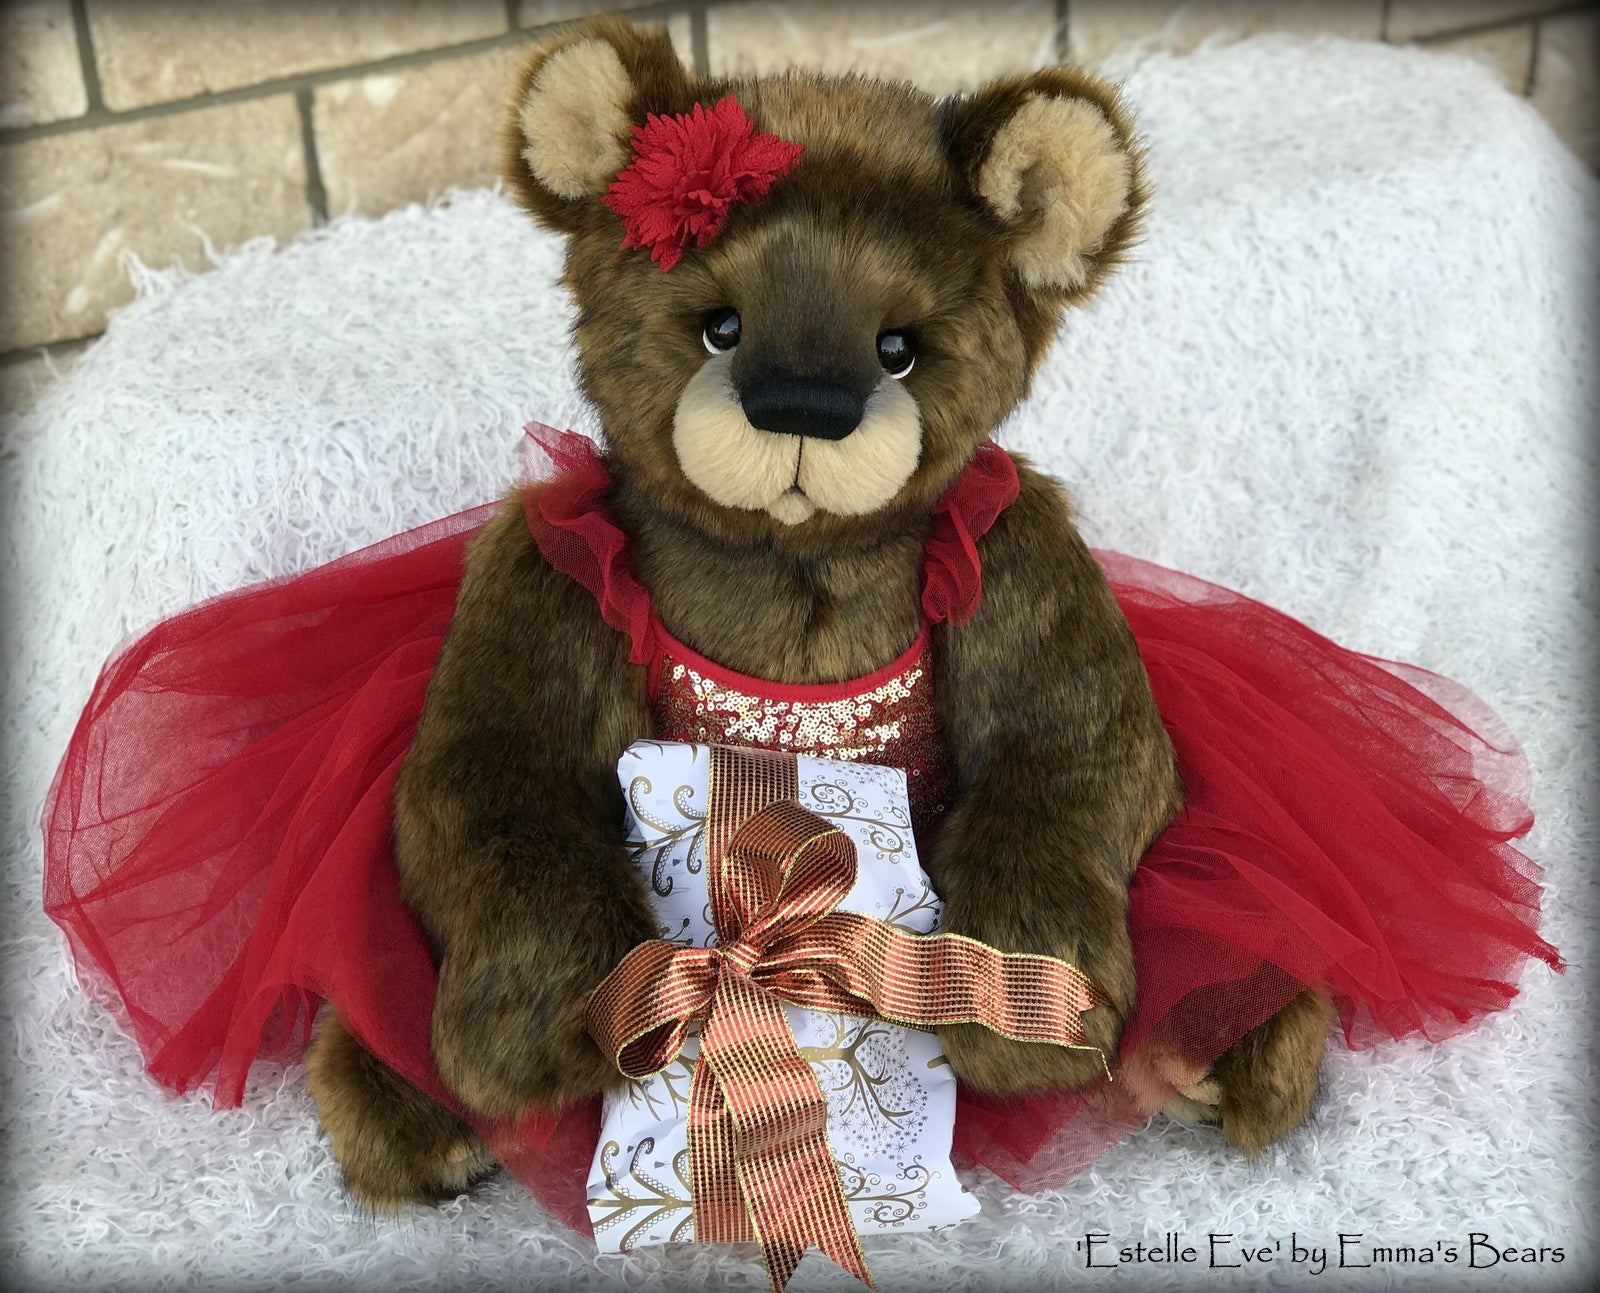 Estelle Eve - 25" Christmas 2018 Toddler Artist Bear by Emma's Bears - OOAK